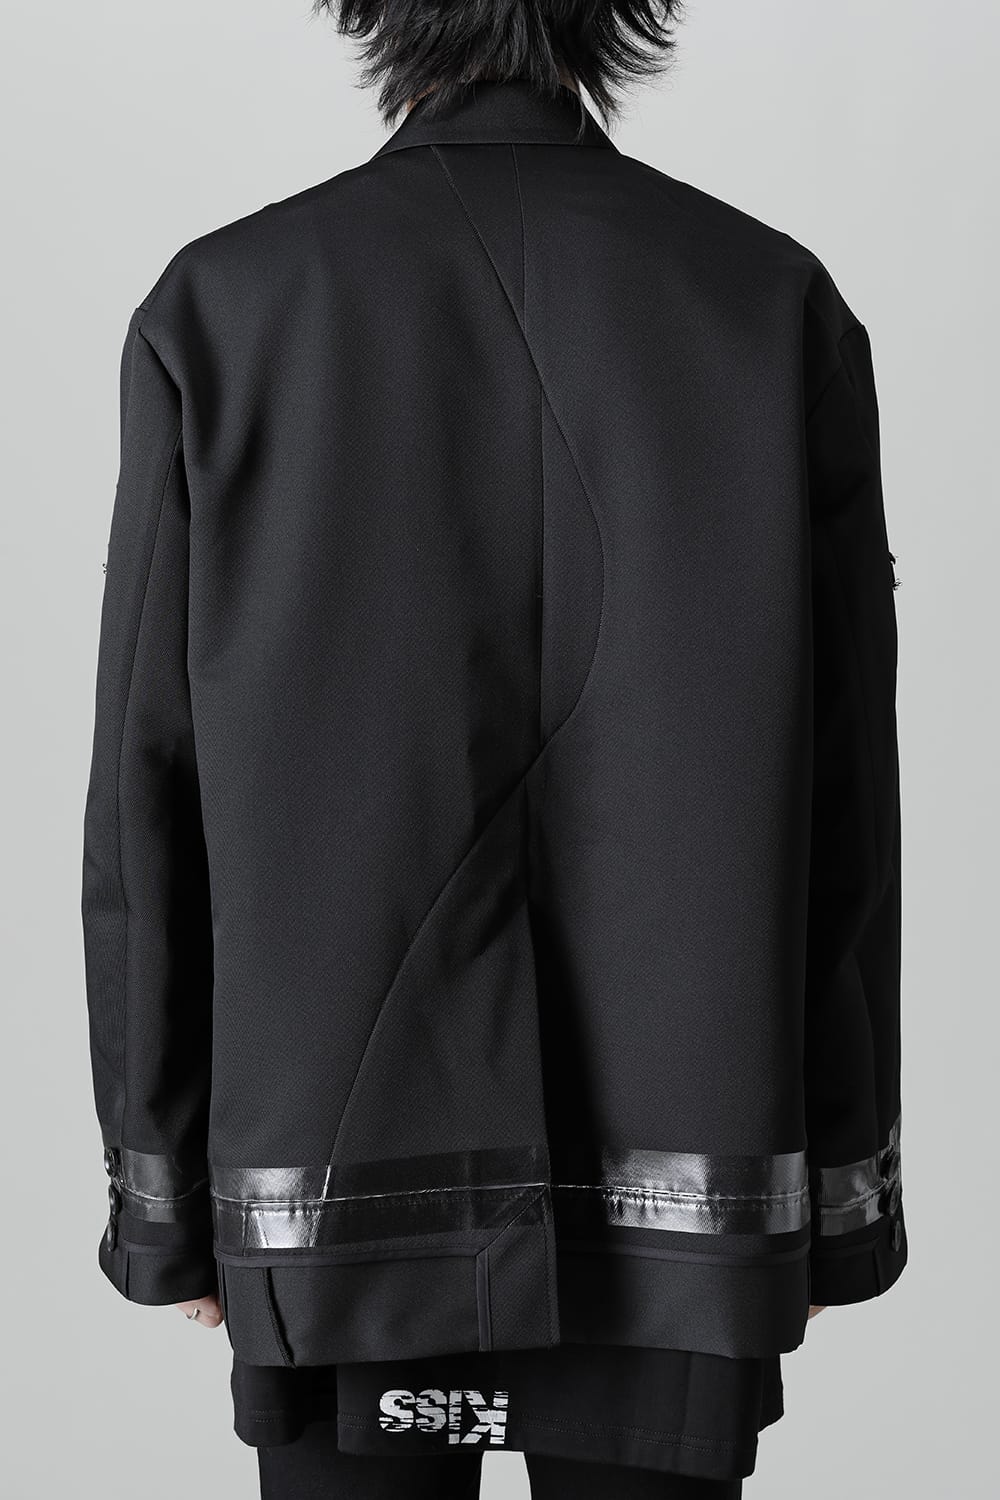 sj.0001 | re-sized notched lapels jacket 